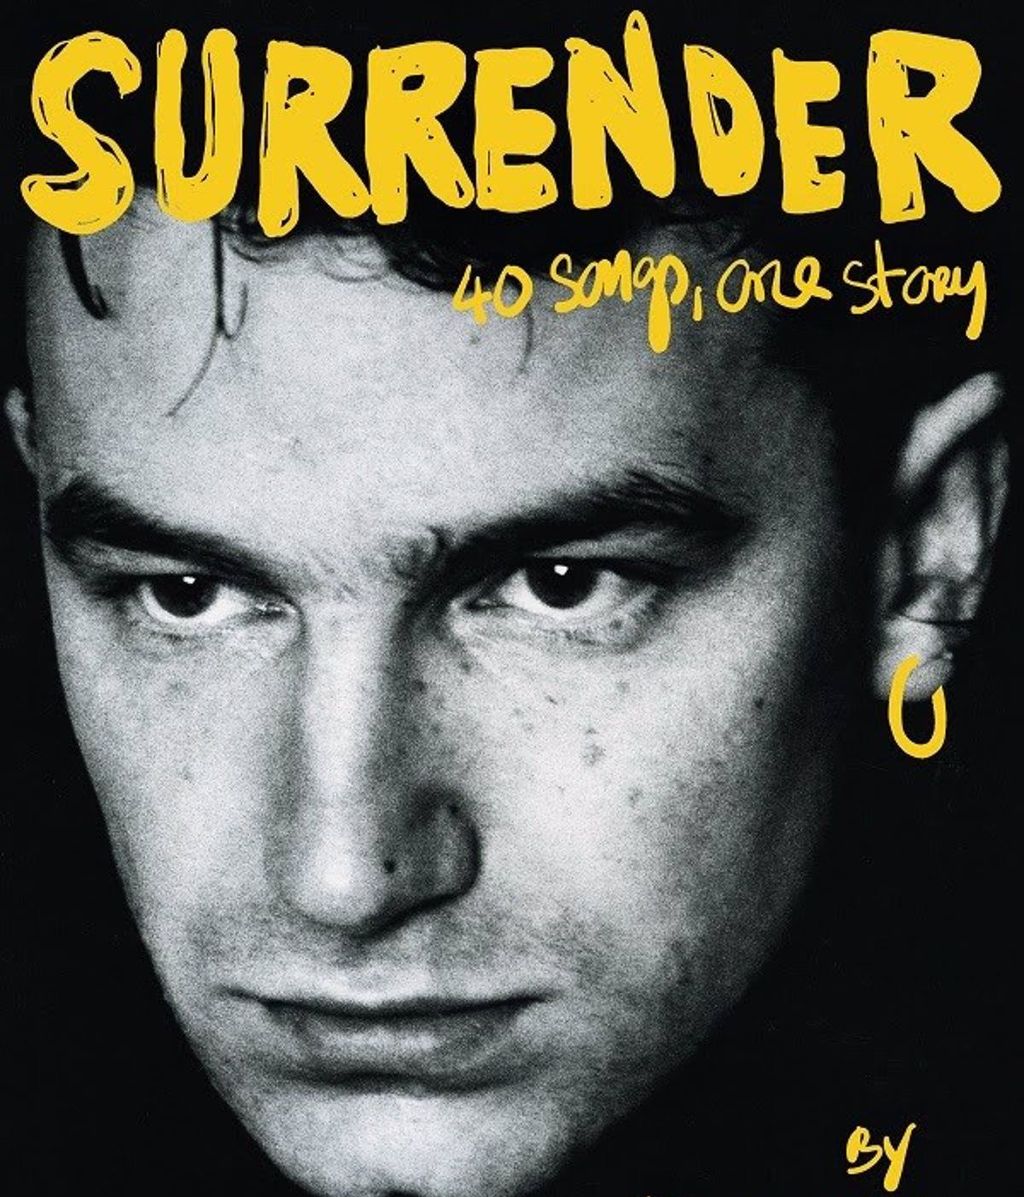 Portada del libro  'Surrender' (Reservoir), de Bono